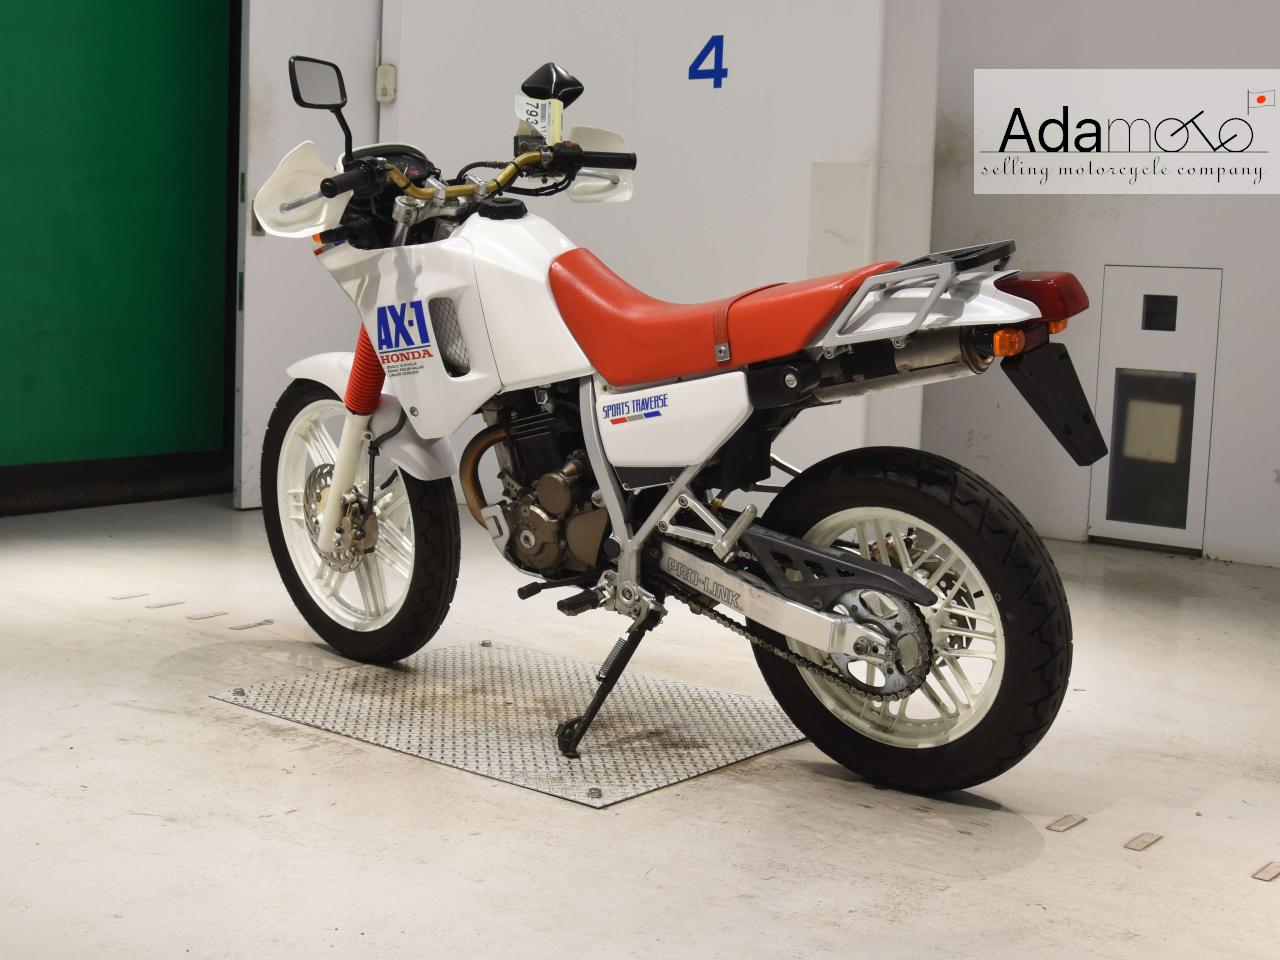 Honda AX 1 - Adamoto - Motorcycles from Japan